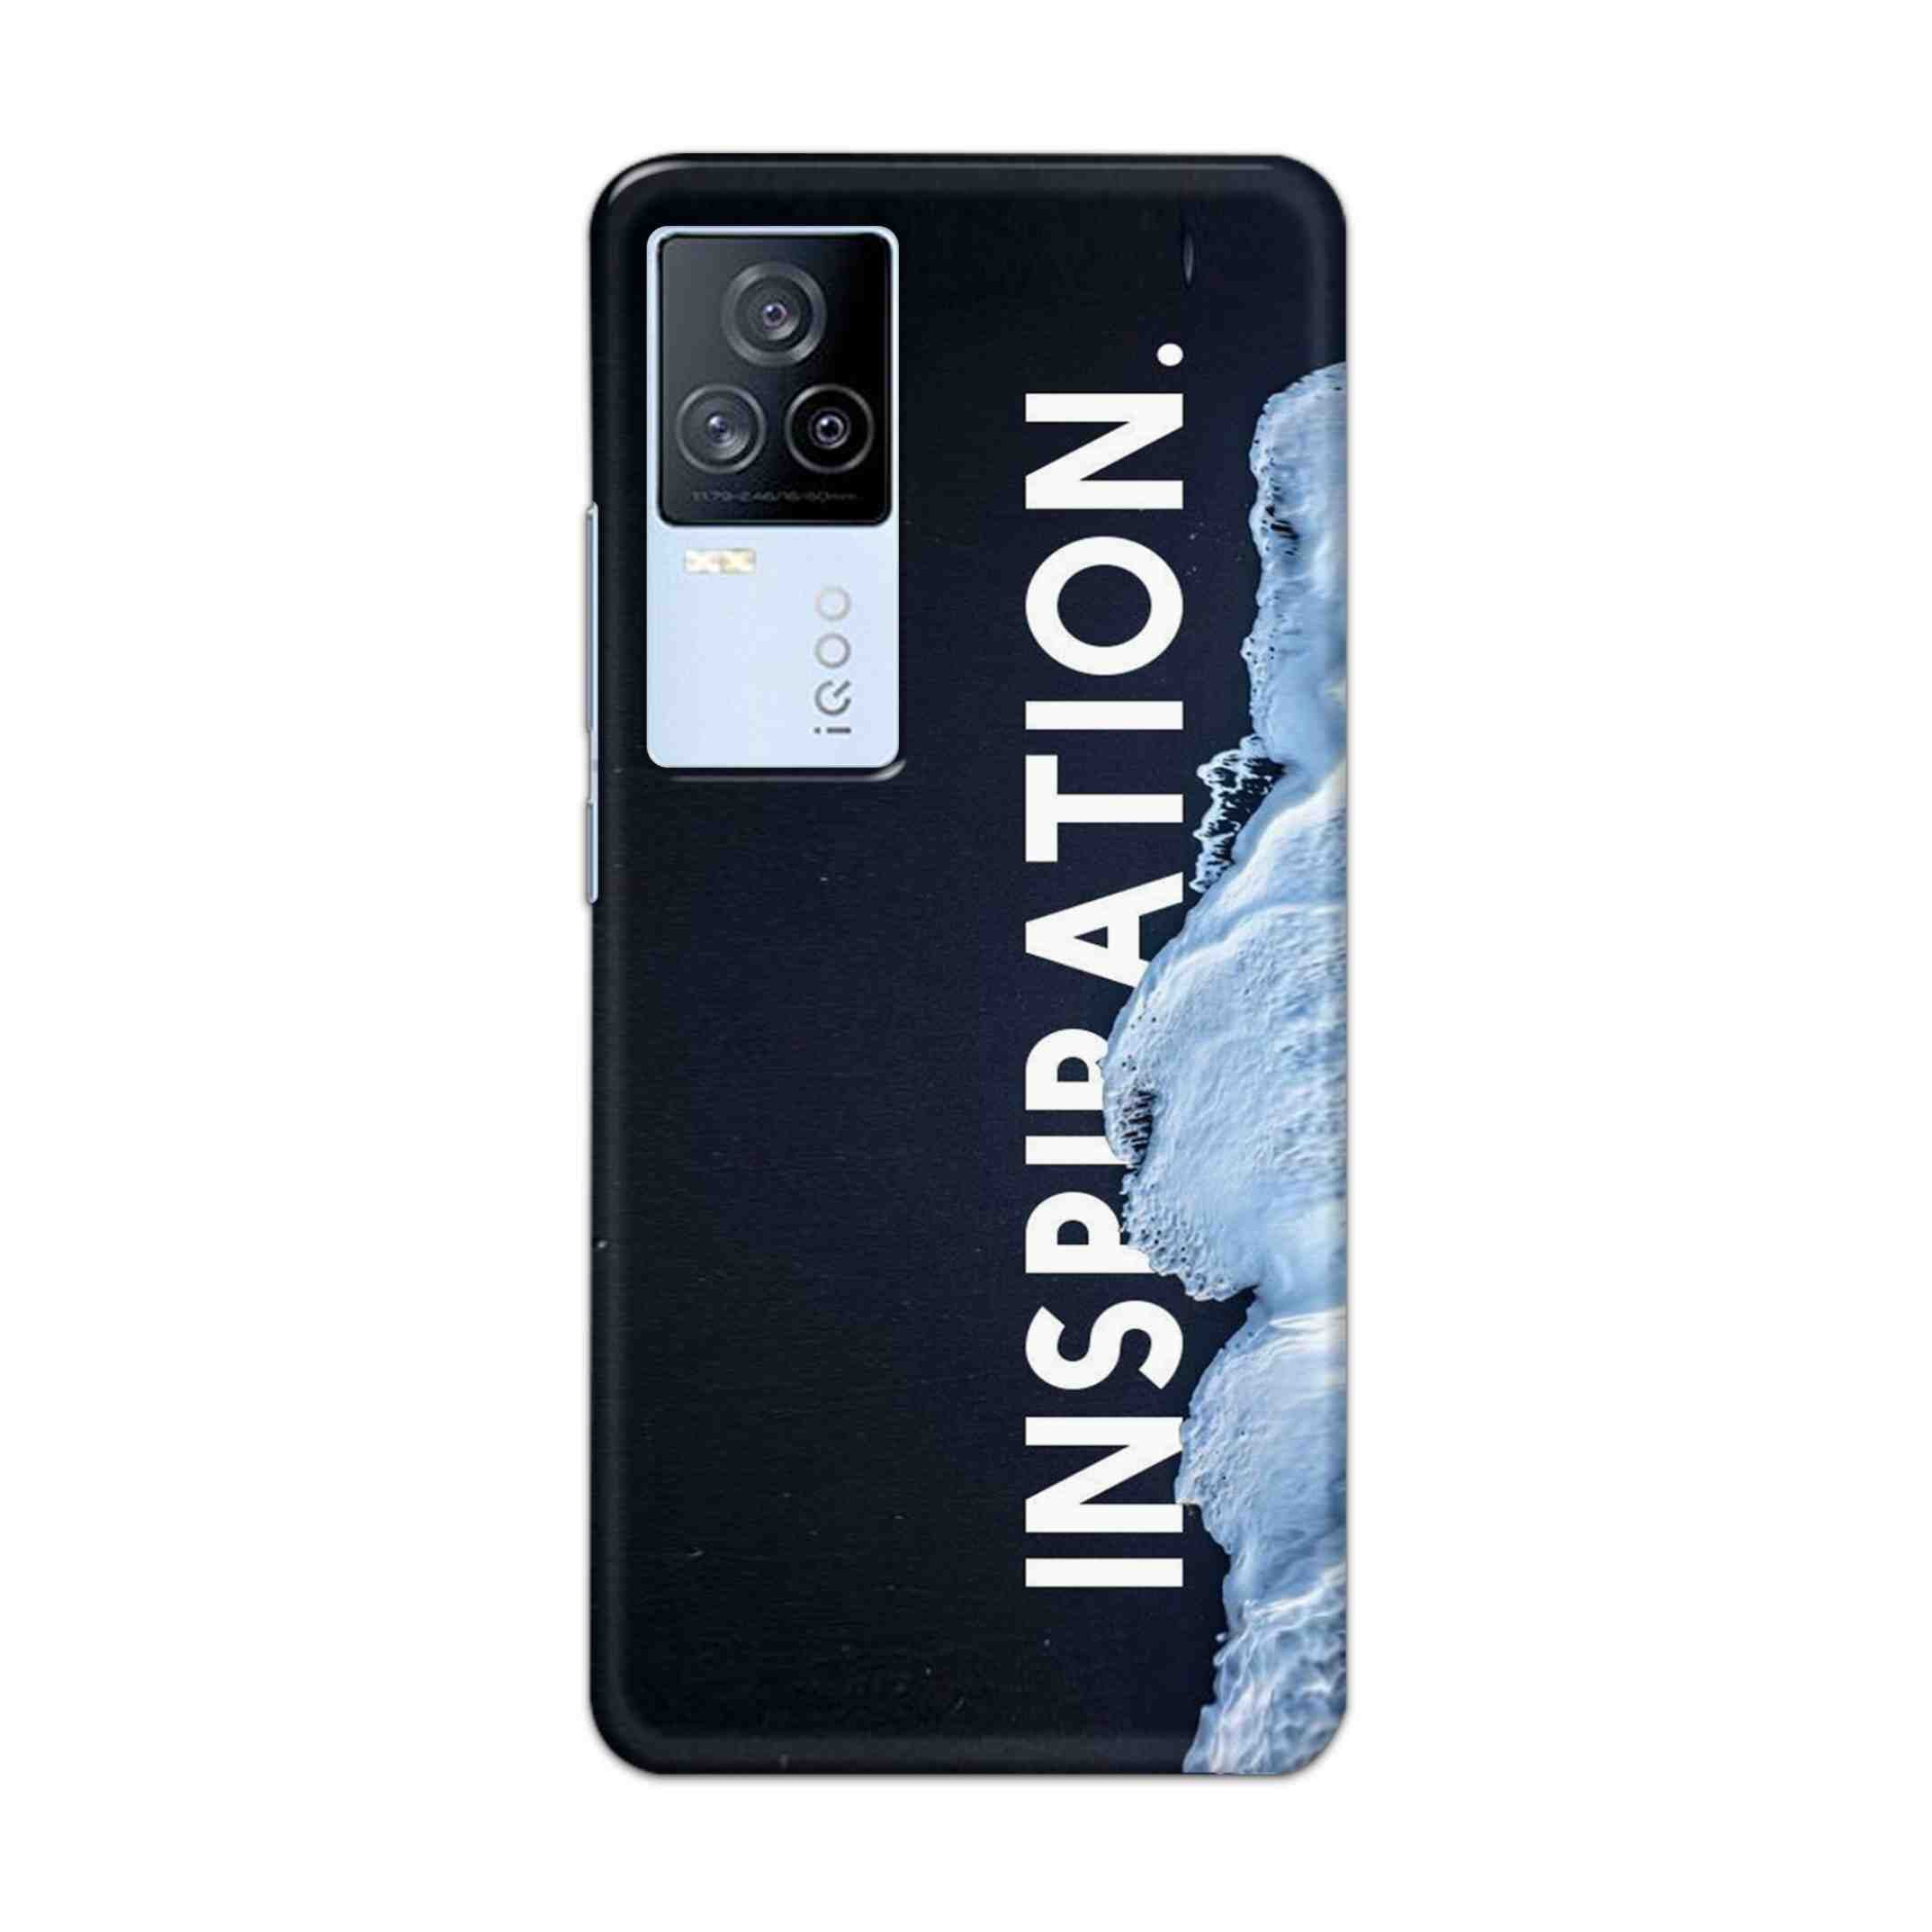 Buy Inspiration Hard Back Mobile Phone Case/Cover For iQOO7 Online